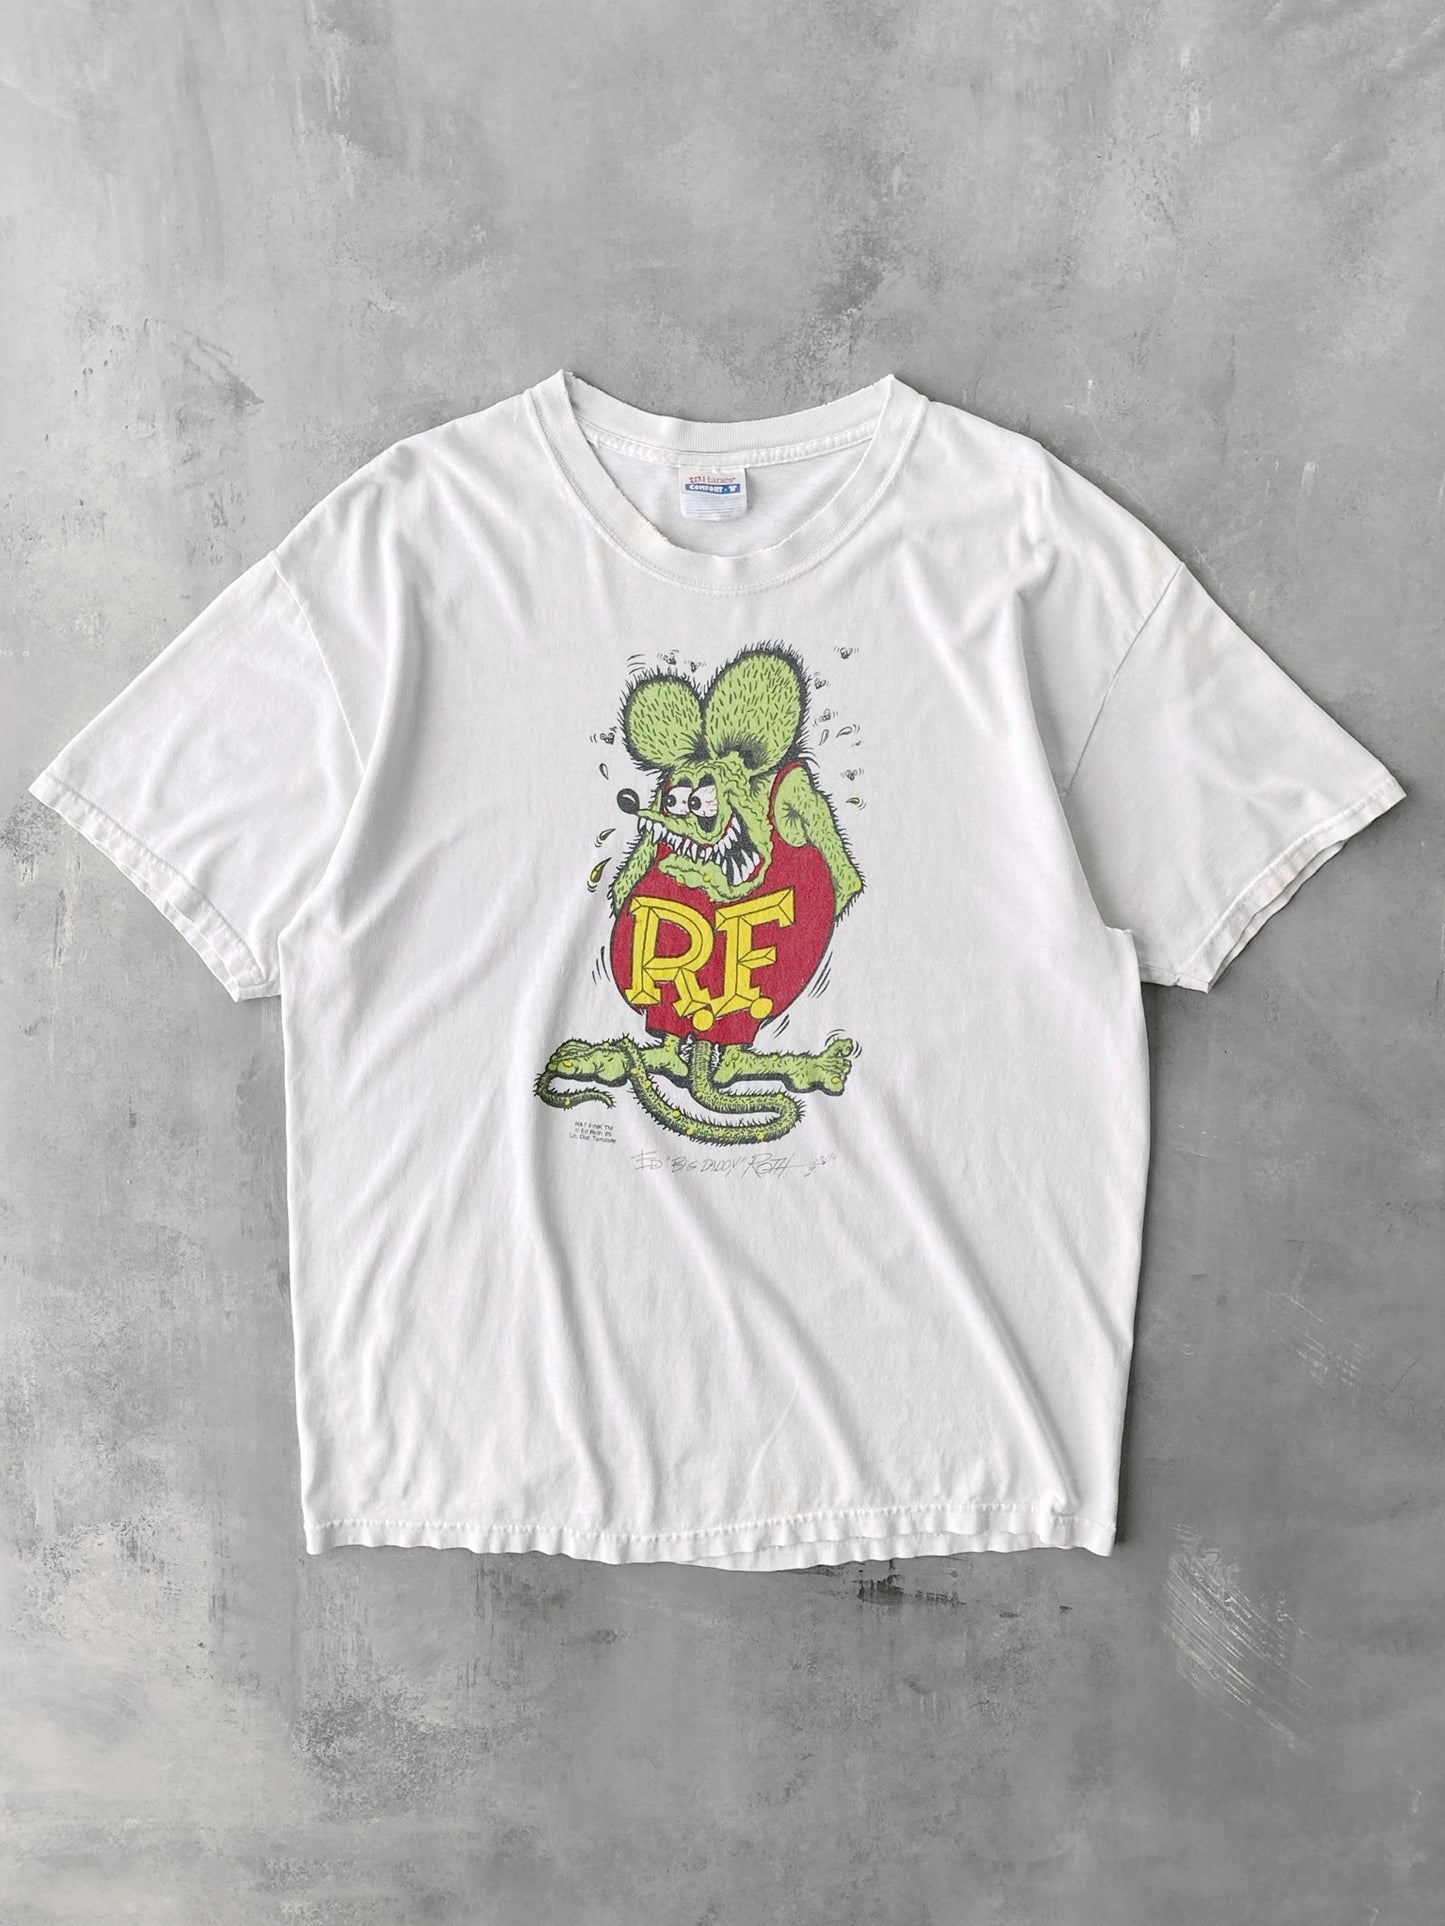 Ed Roth Rat Fink T-Shirt 00's - Large